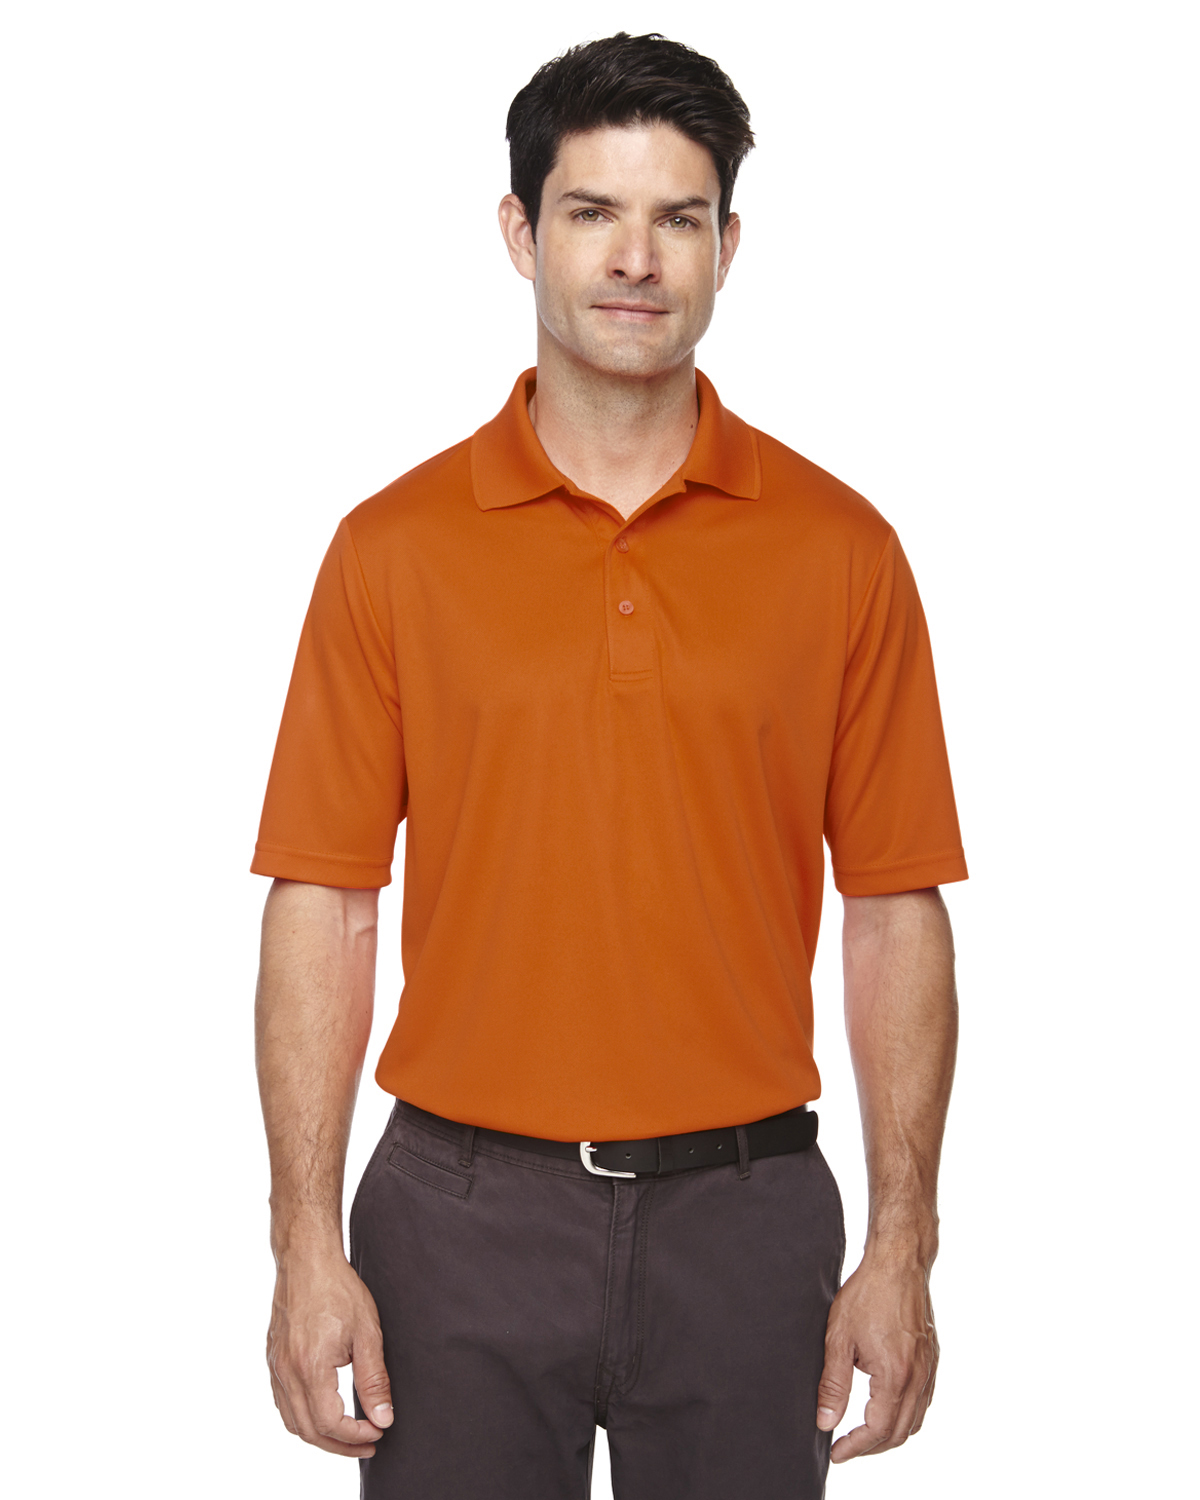 NEW Core 365 Men's 100% Polyester Performance Piqué Polo S-XL Shirt R ...